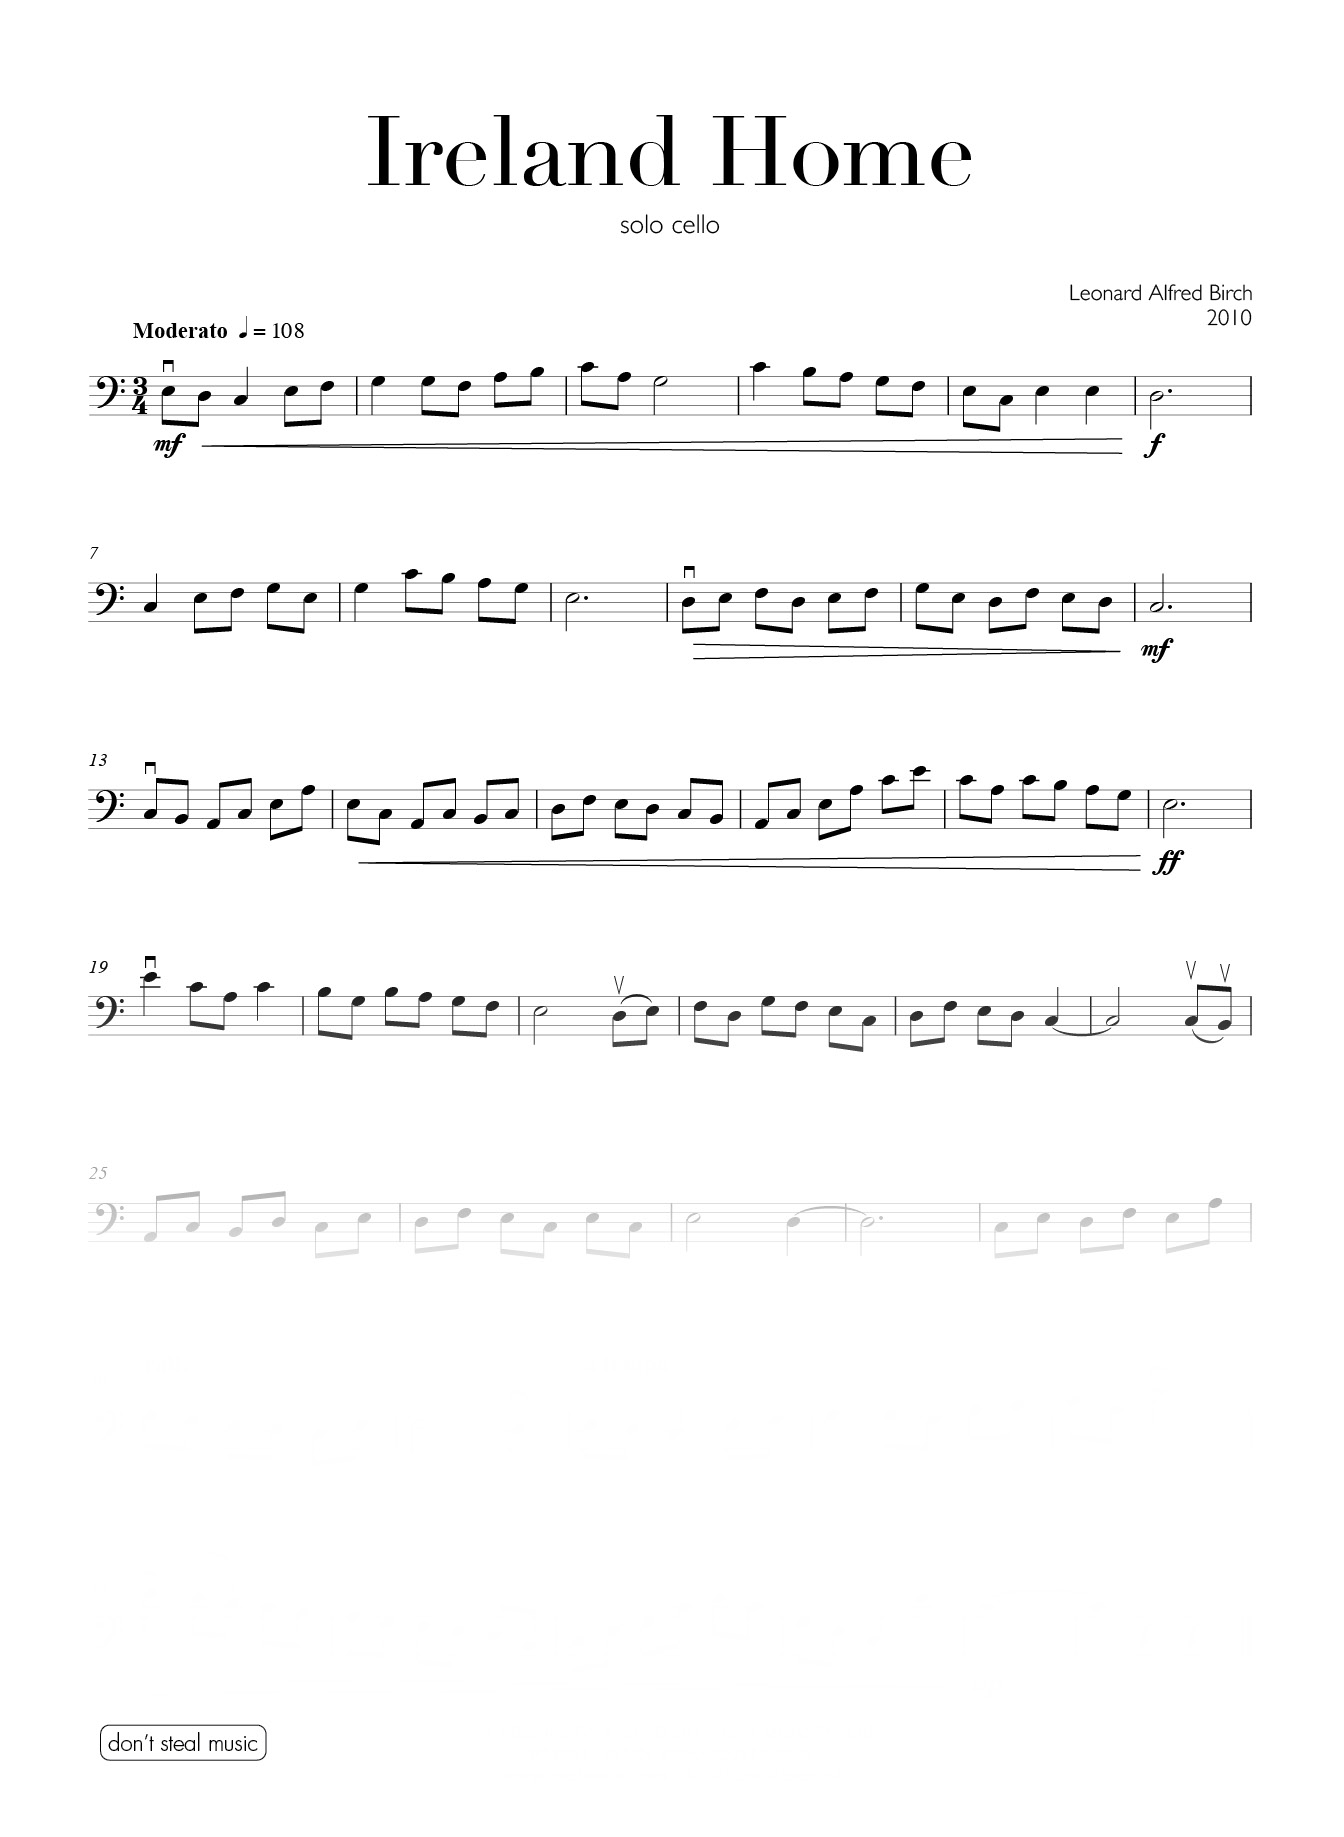 A Collection for Cello (9 pieces) by Leonard Birth for Solo Cello